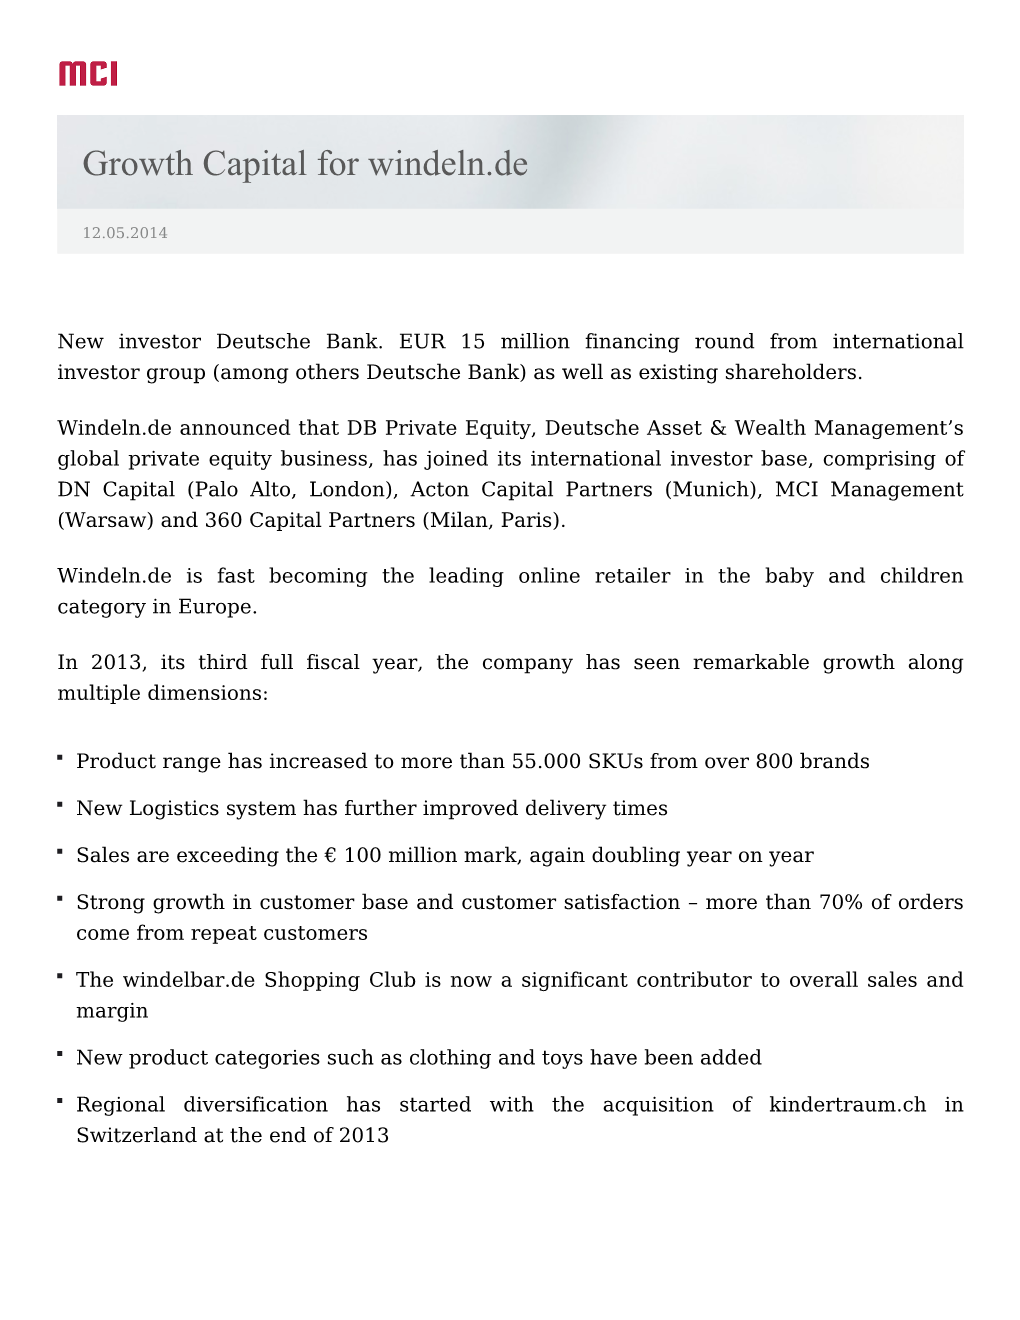 Growth Capital for Windeln.De